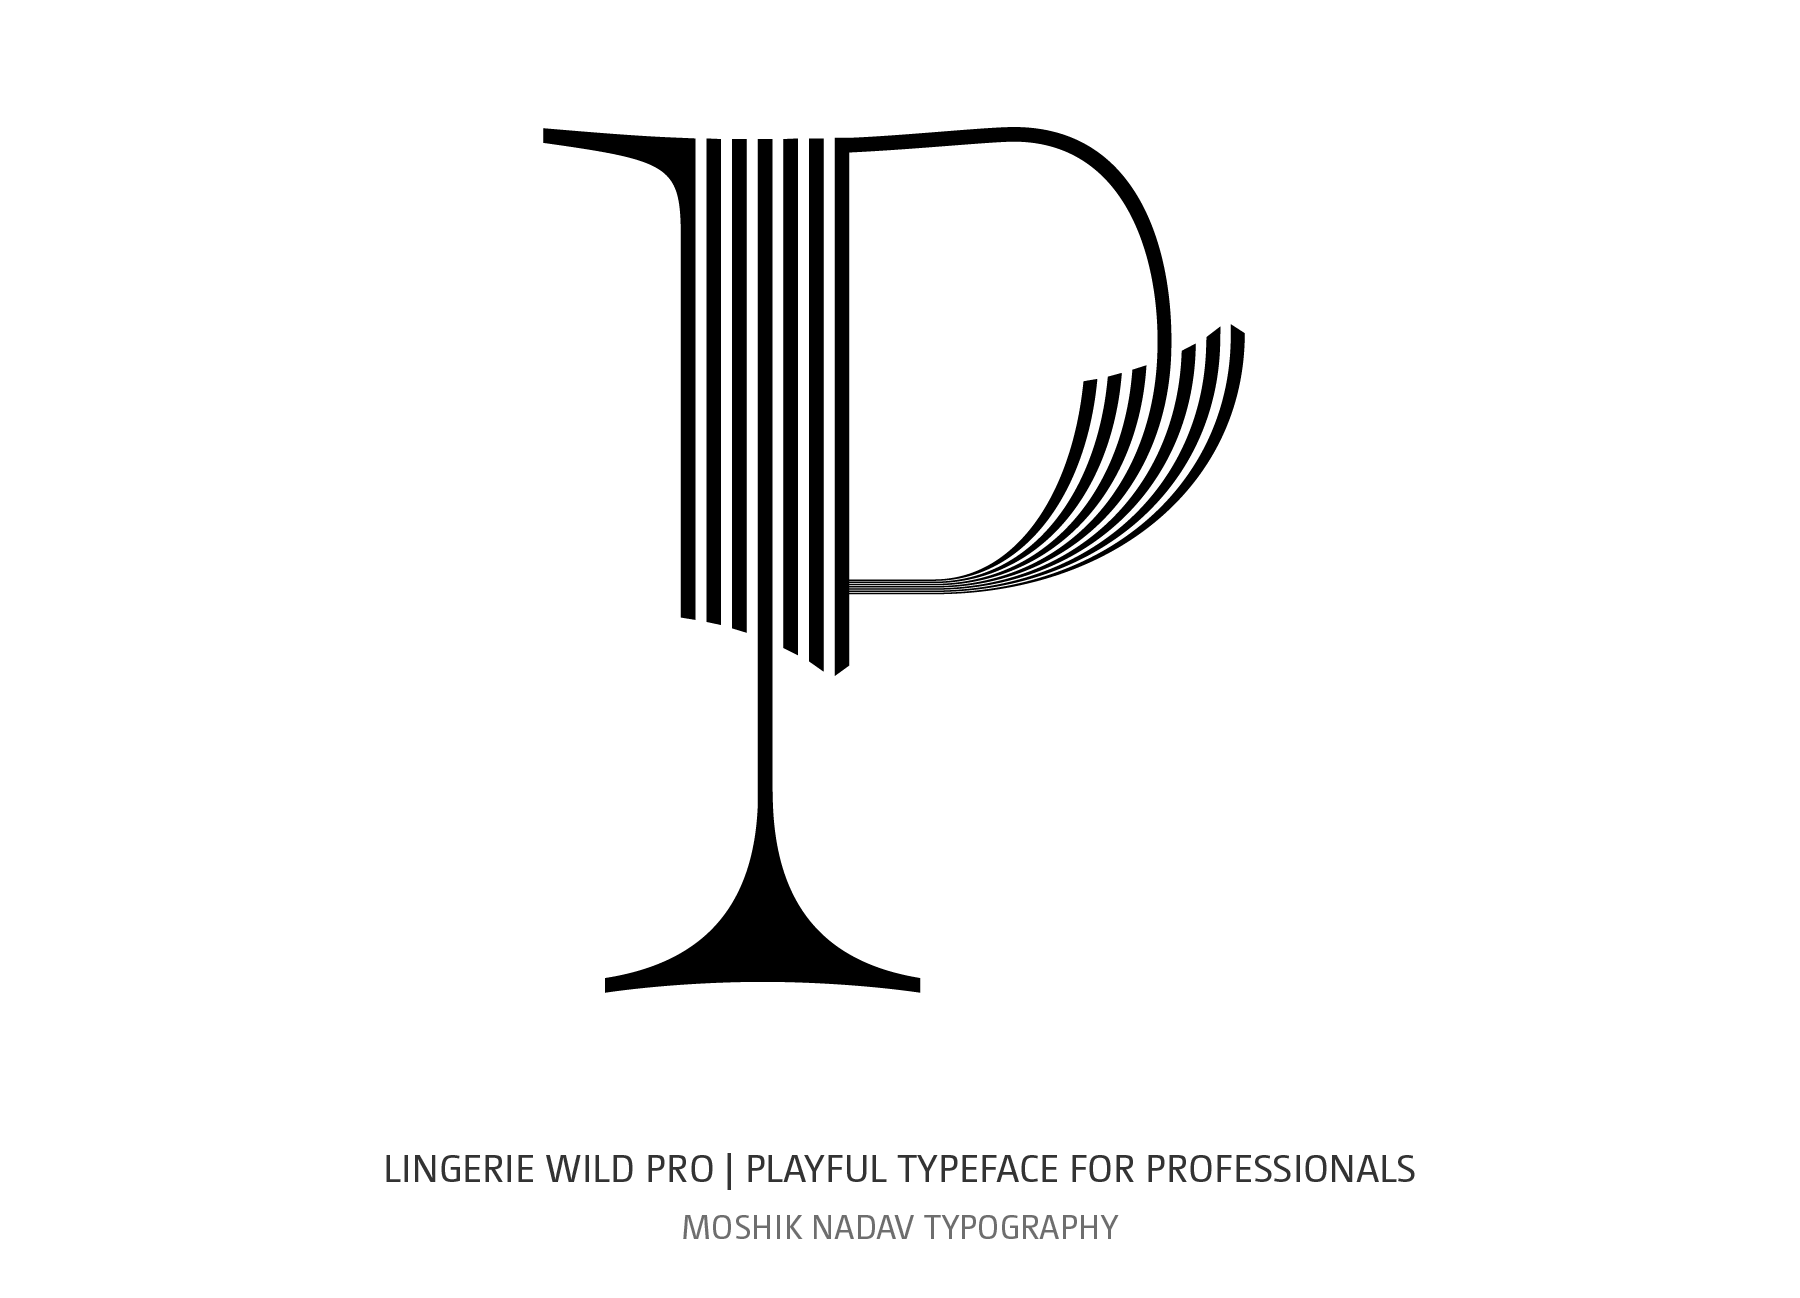 Lingerie Wild Pro typeface uppercase P designed by Moshik Nadav Typography